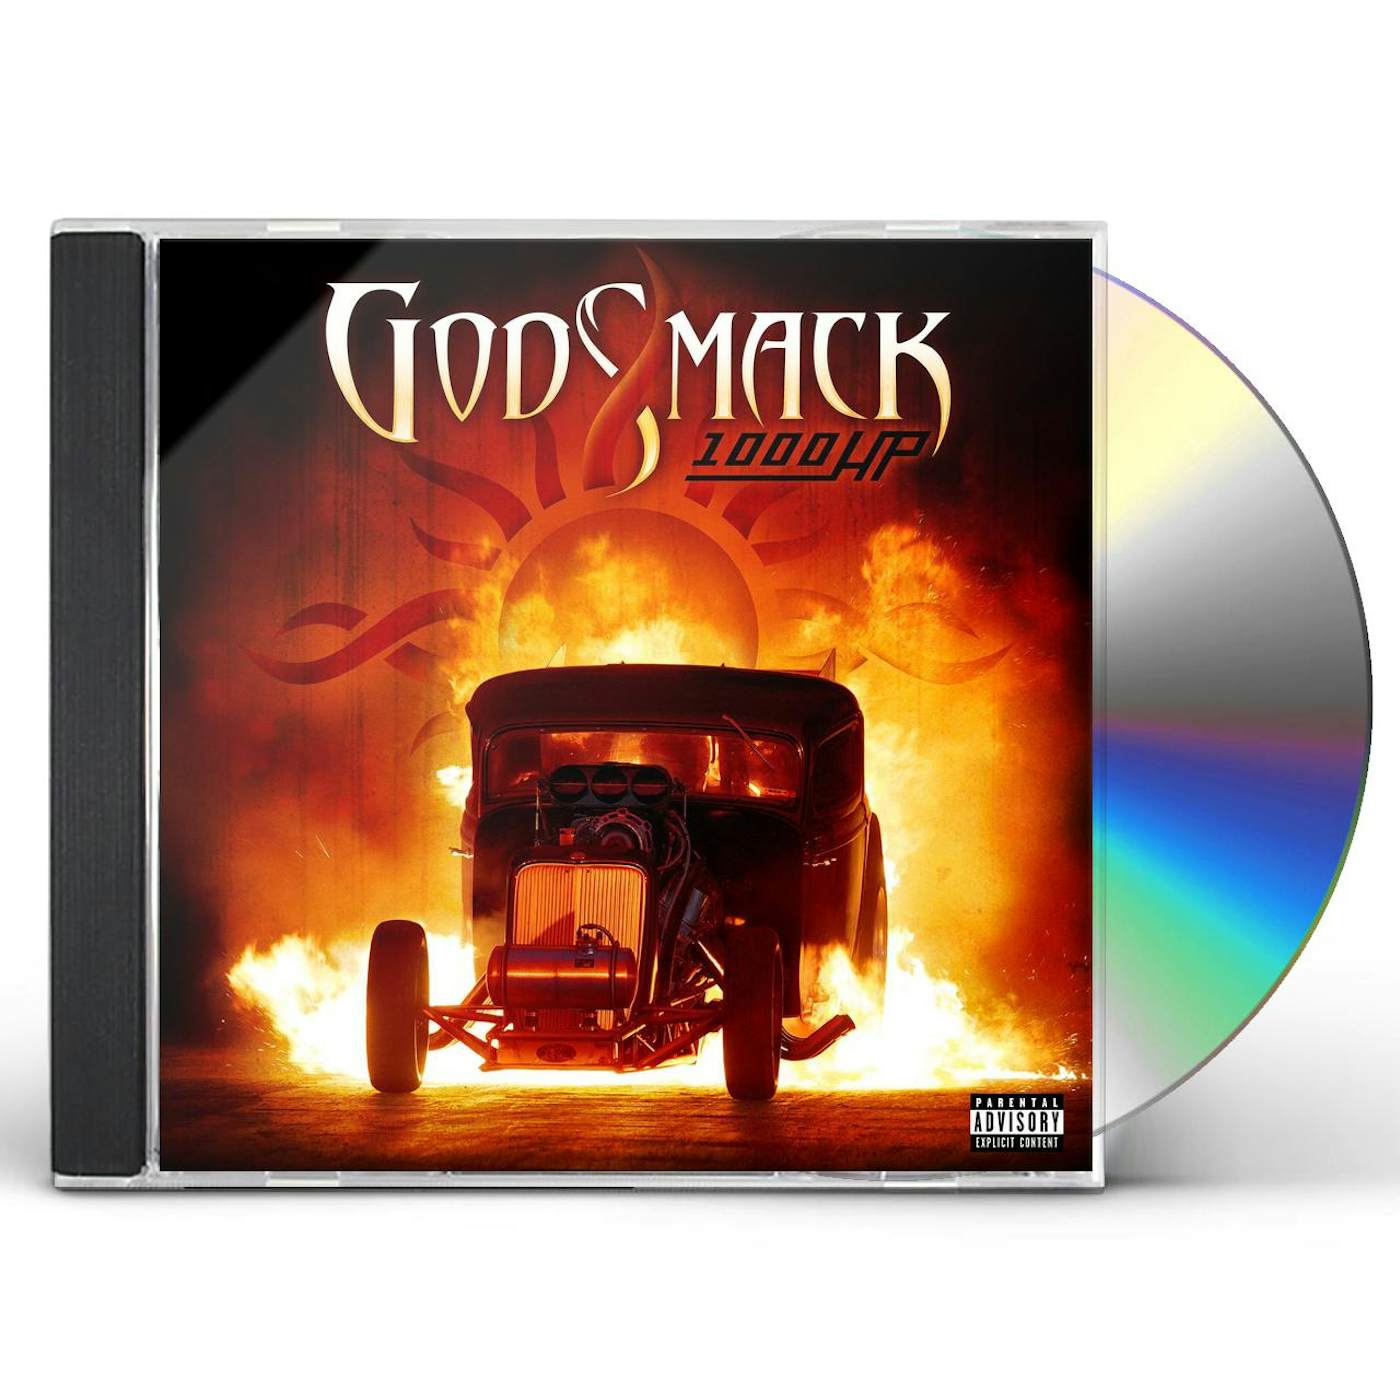 Godsmack 1000HP CD